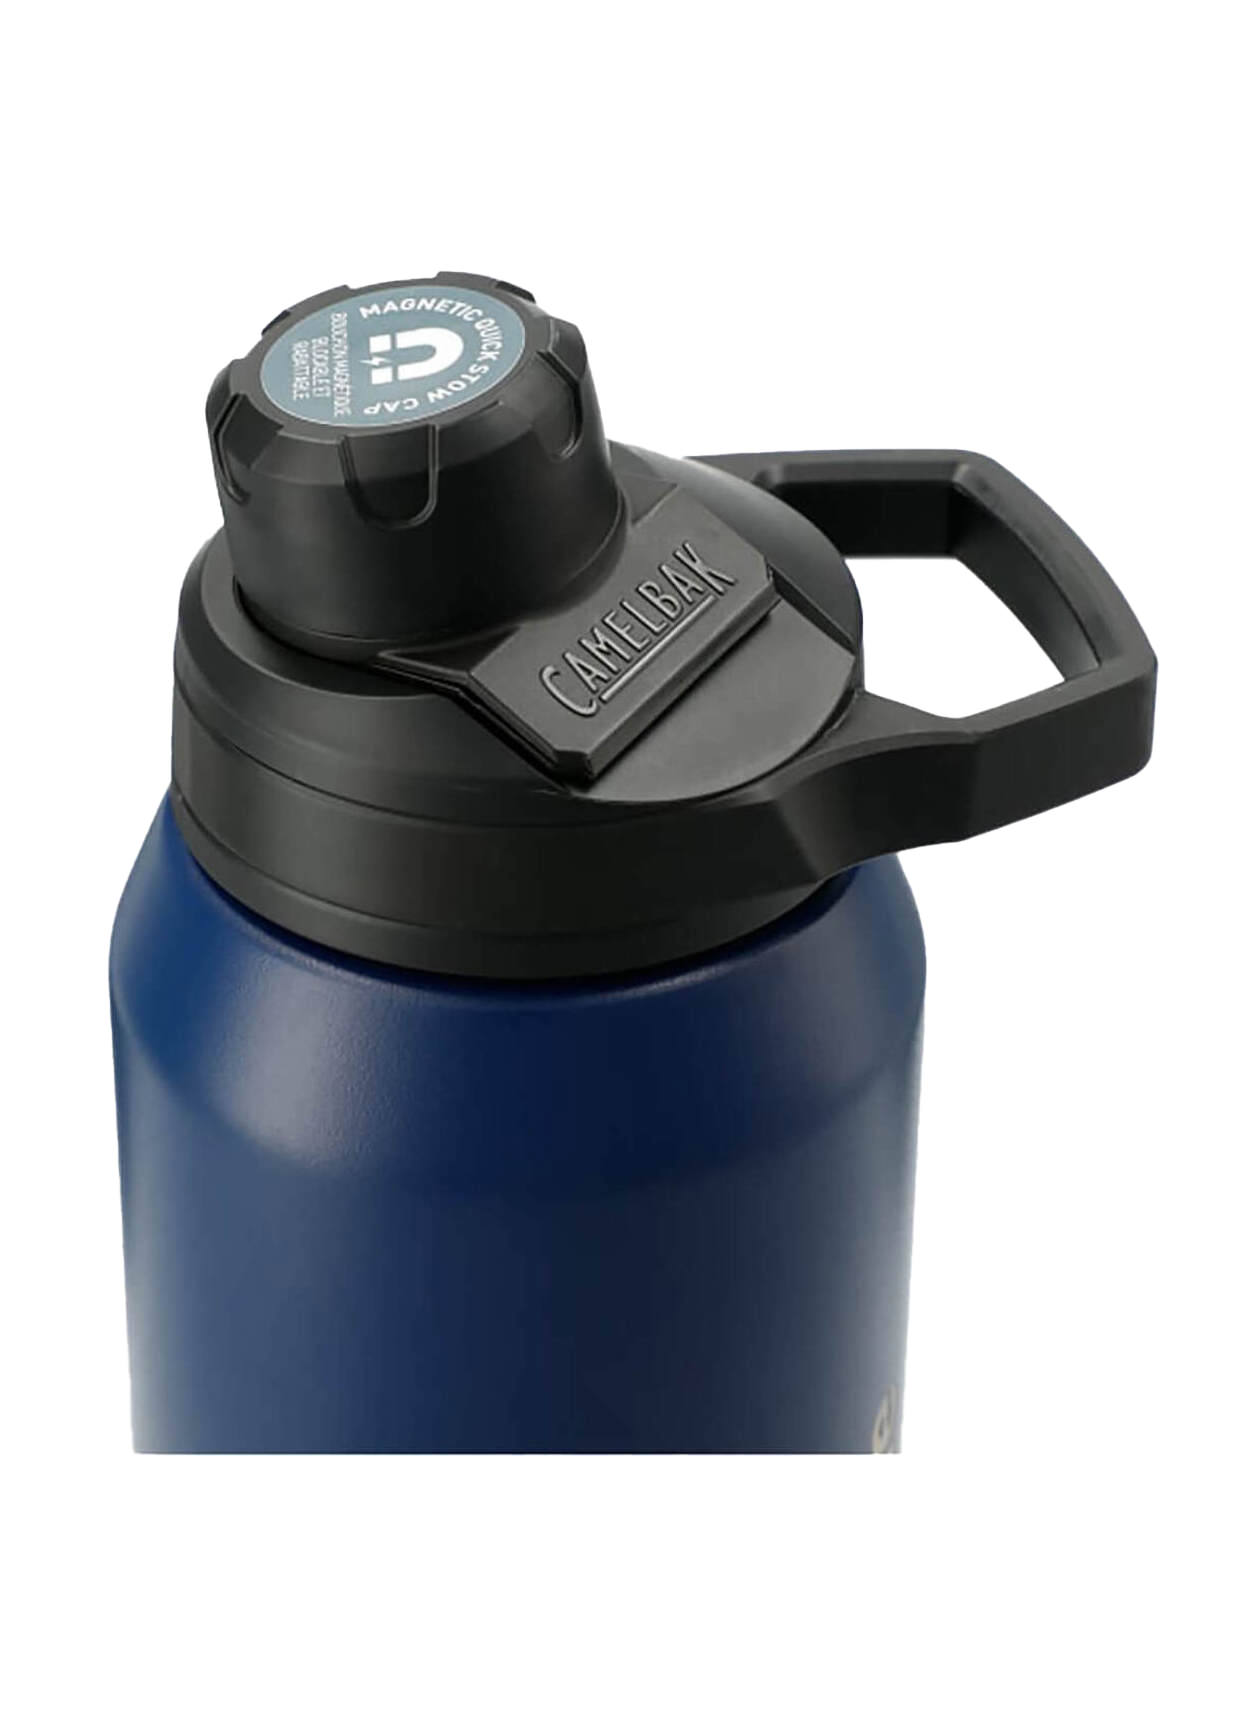 CamelBak Eddy+ Vacuum Stainless 32 oz Insulated Water Bottle Navy